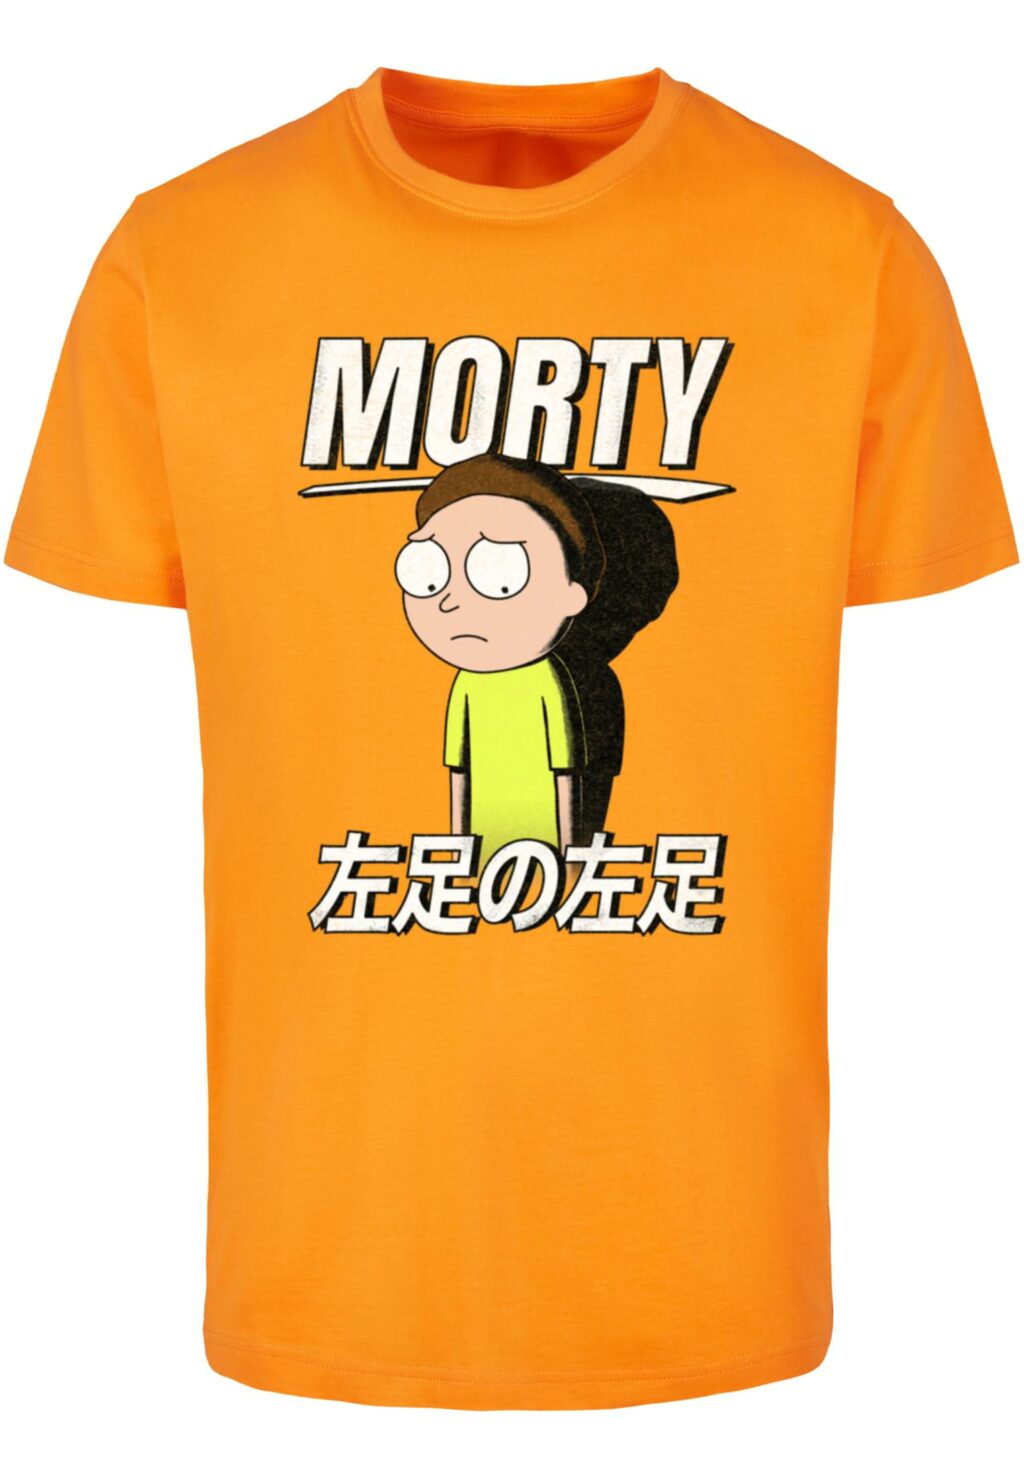 Rick and Morty Sad Morty Tee paradise orange MC931